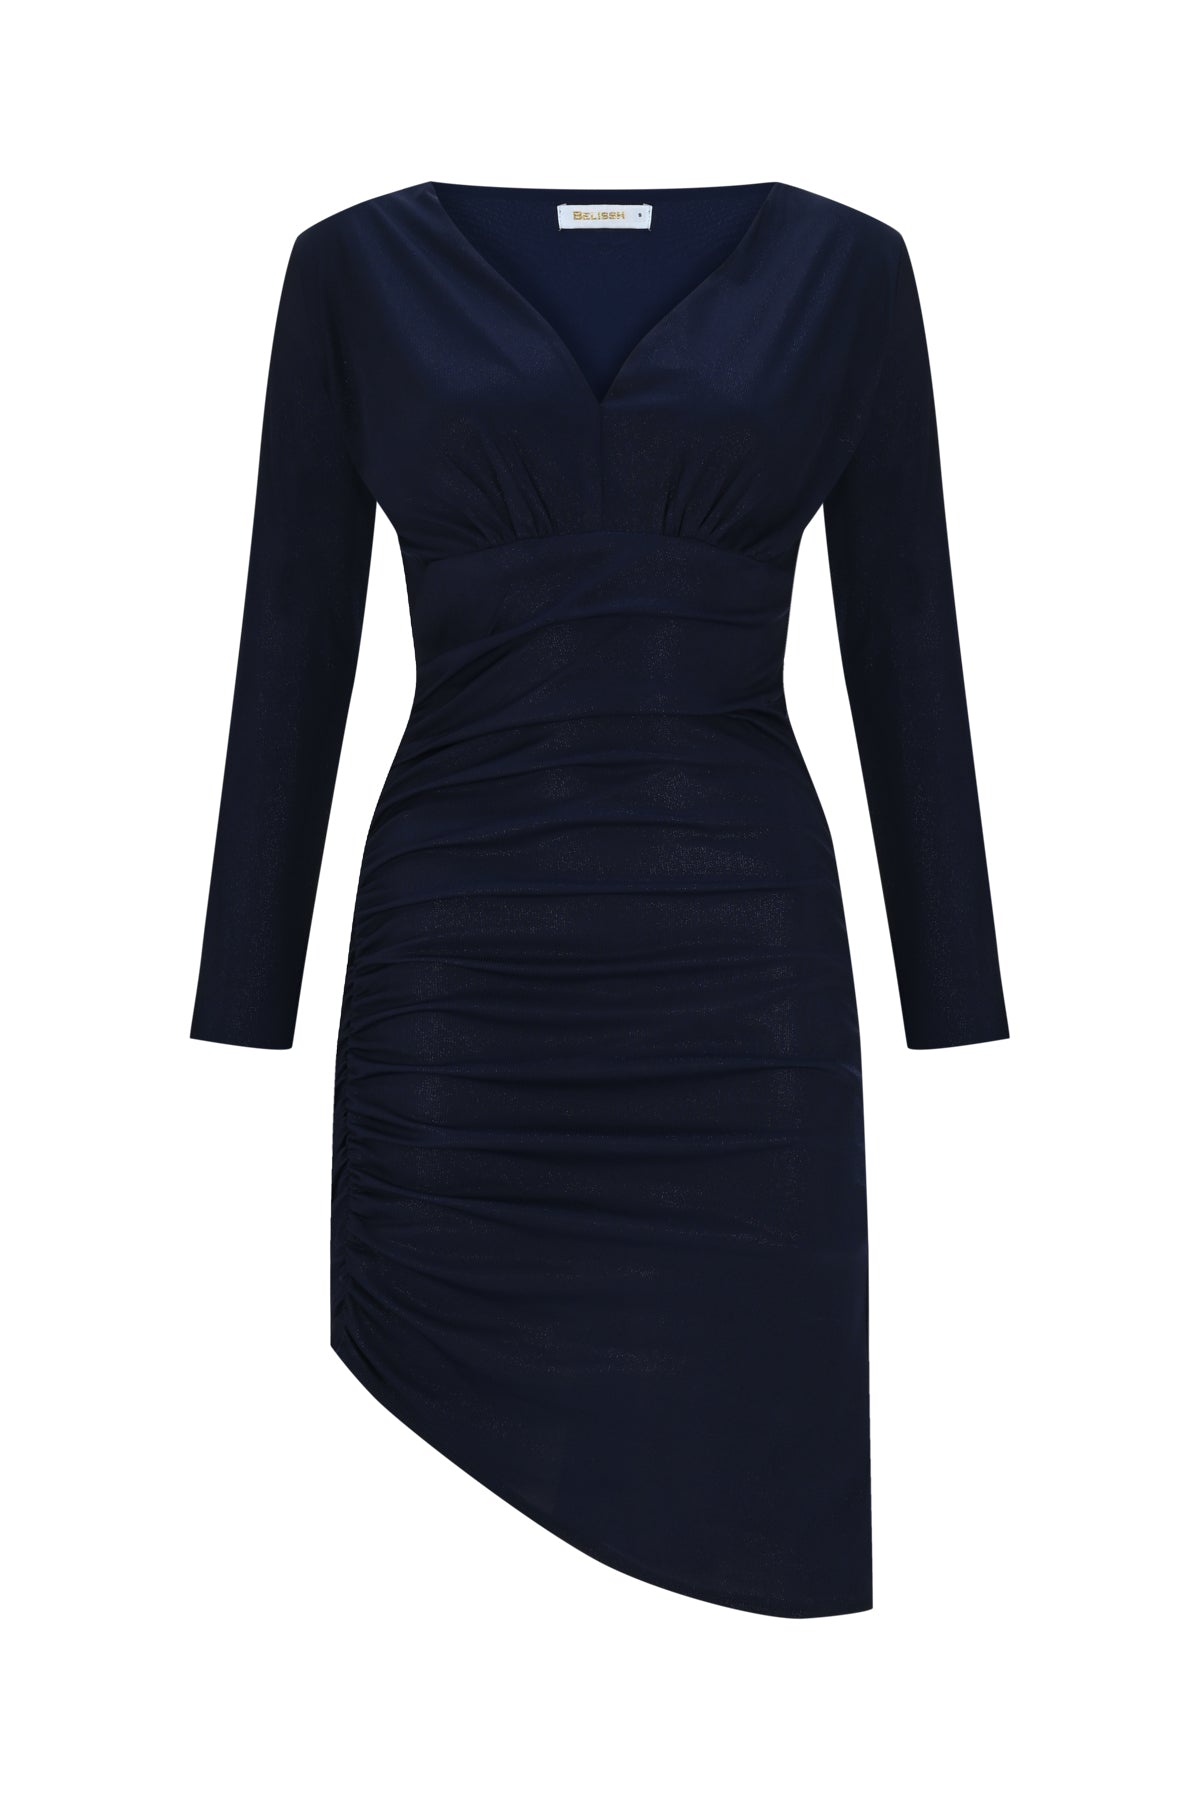 Shimmery V-Neck Drape Asymmetrical Hem Dress - Navy Blue